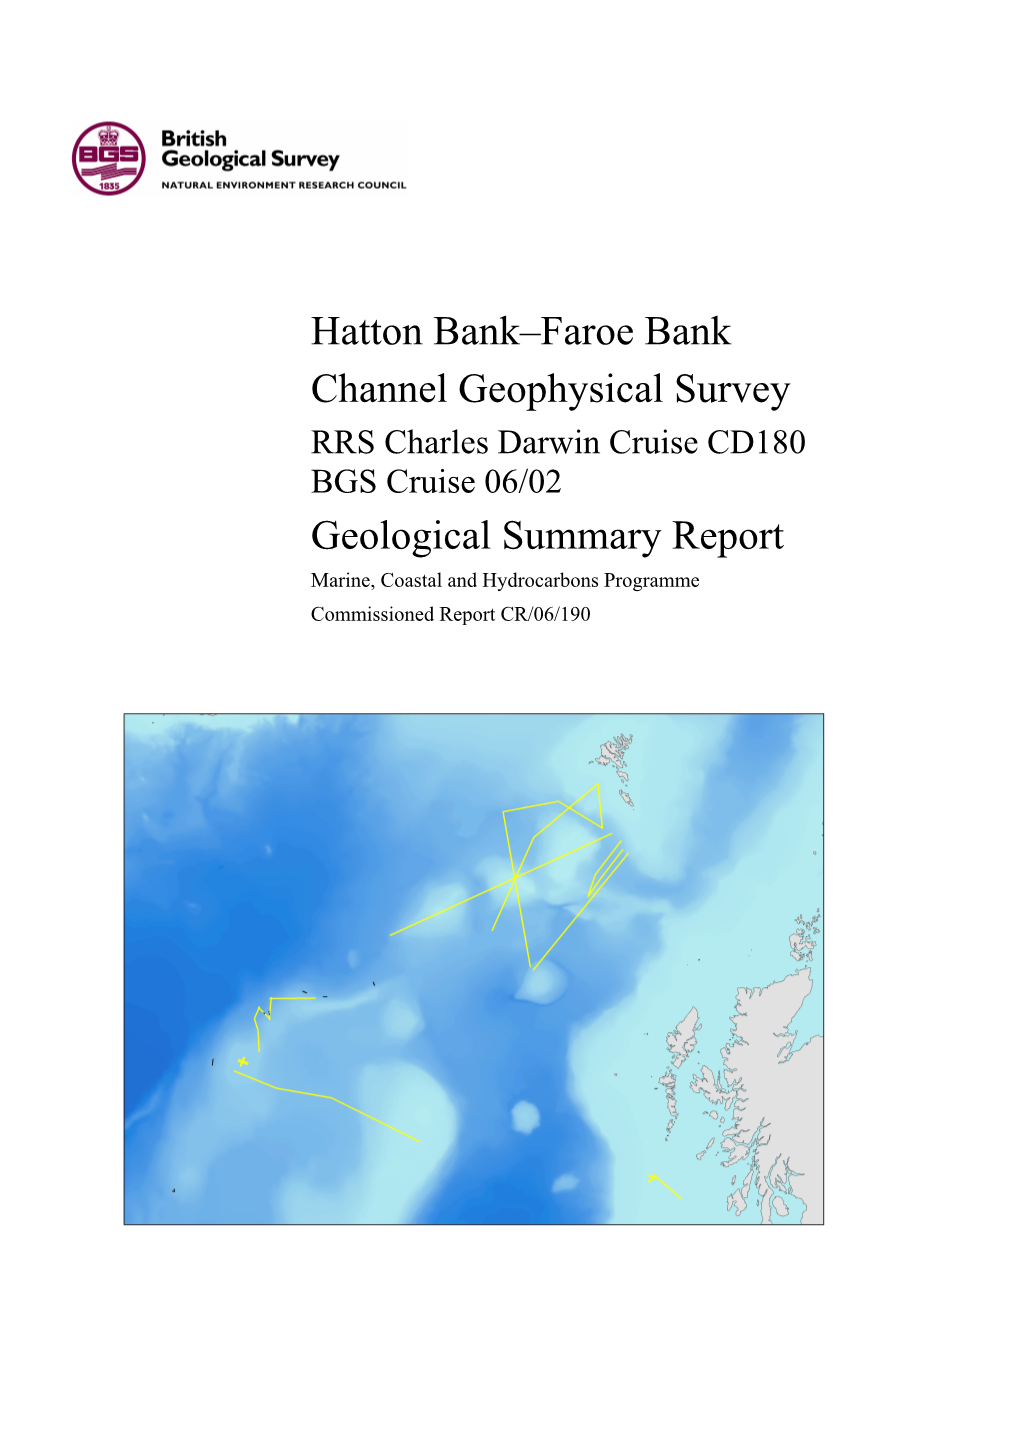 Hatton Bank-Faroe Bank Channel Geophysical Survey